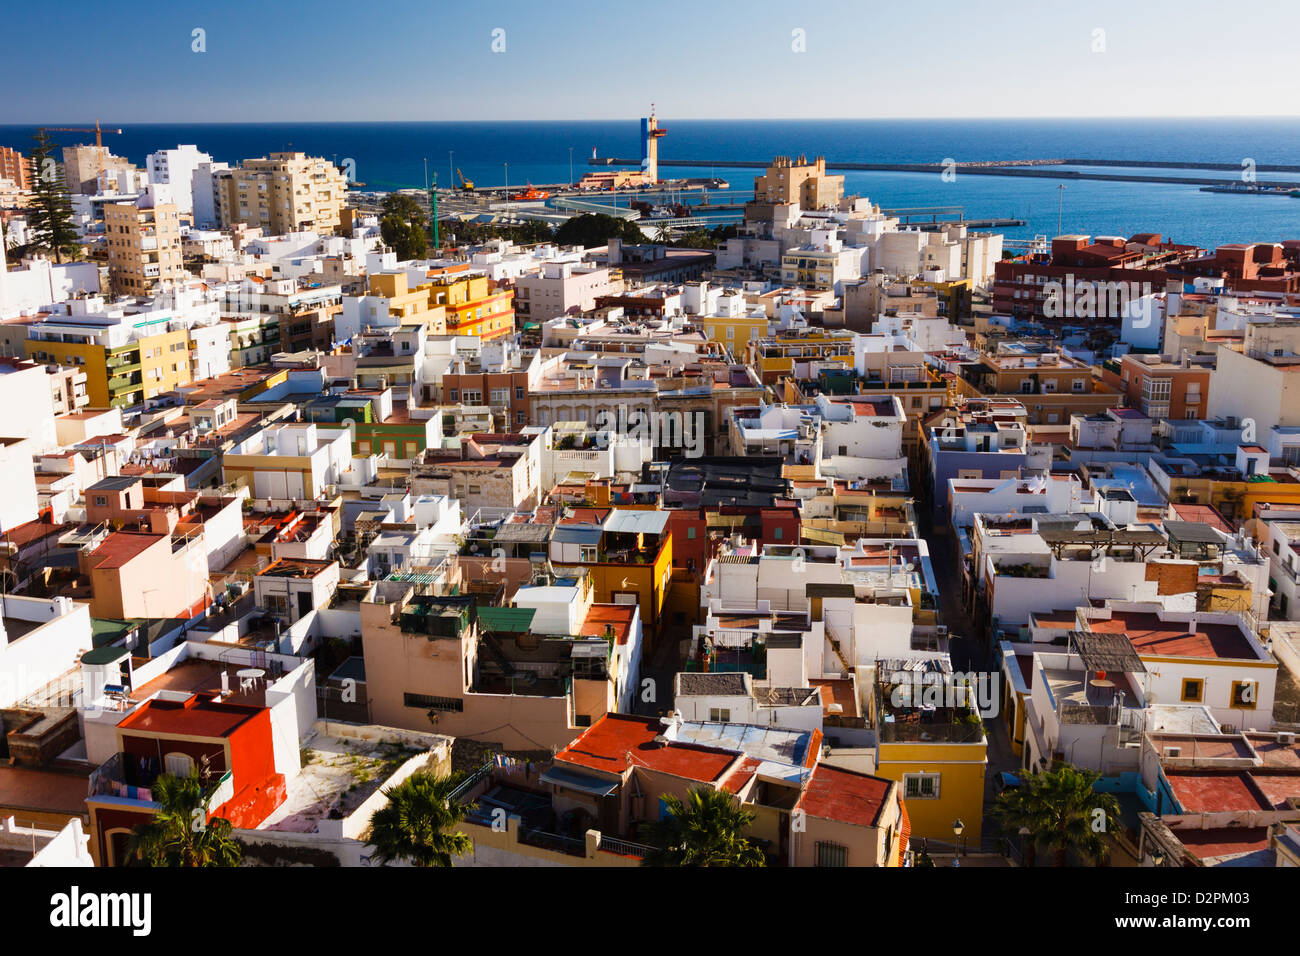 Almeria overview, Spain Stock Photo - Alamy